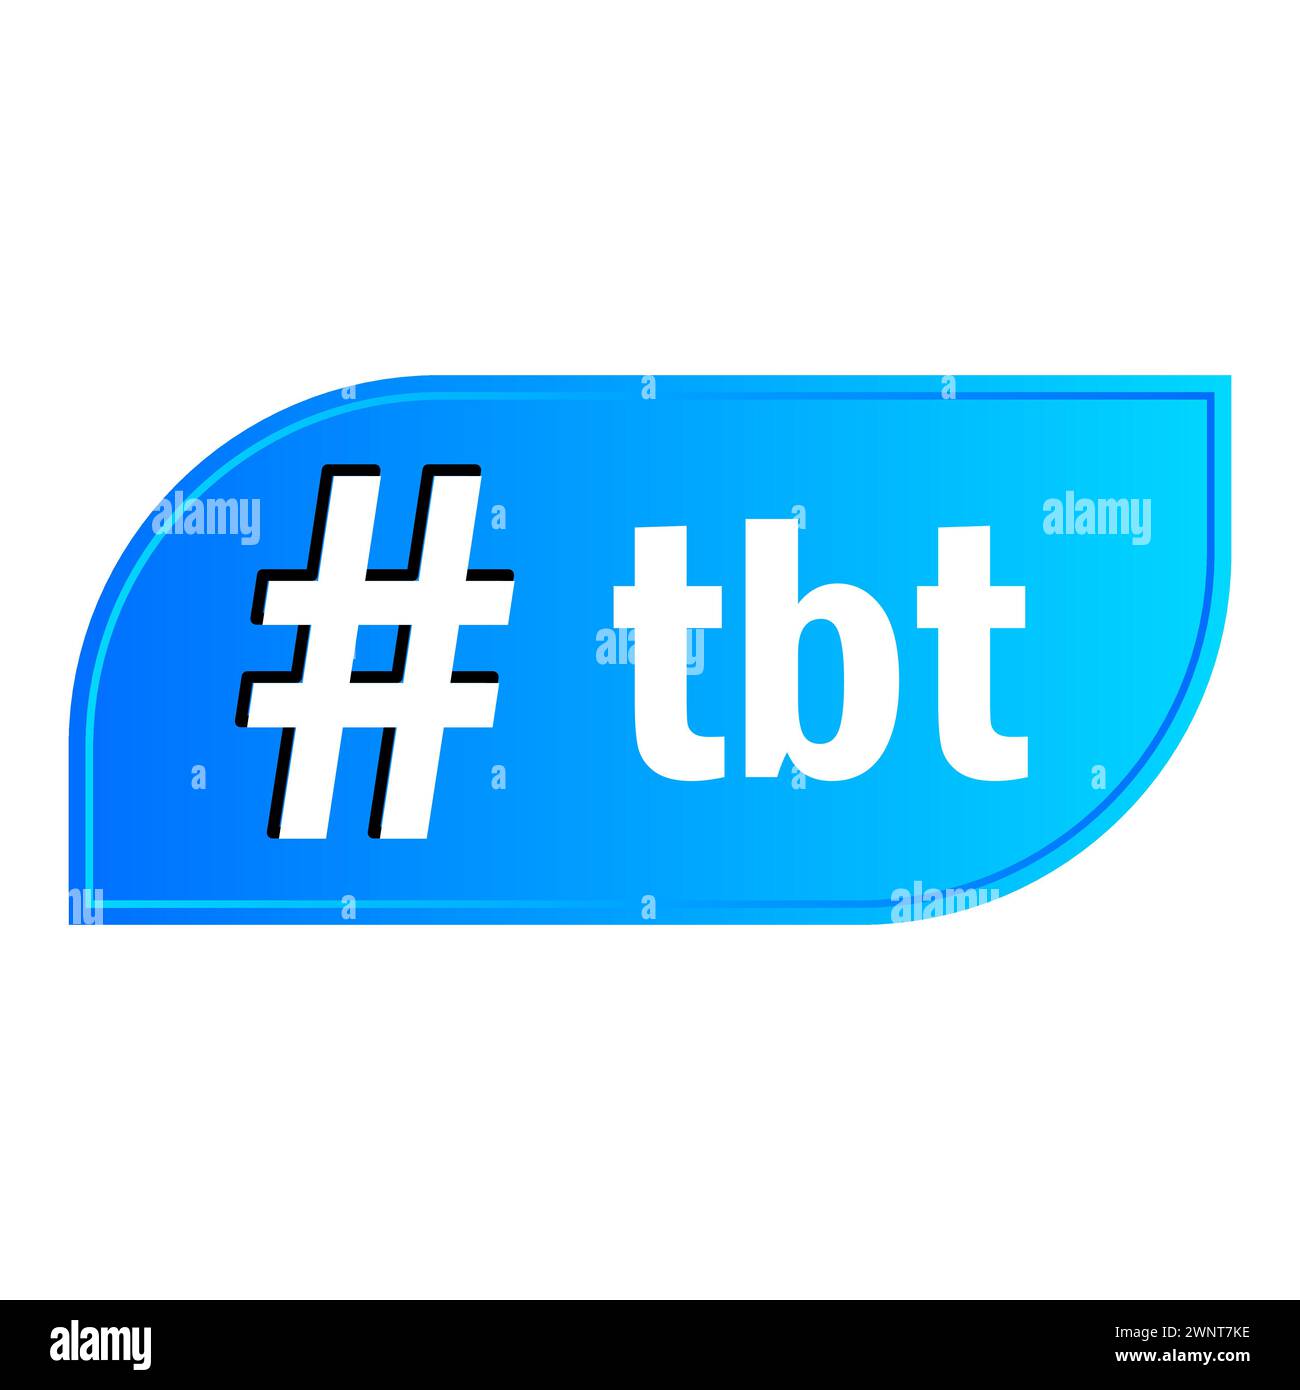 Tbt hashtag. Thursday throwback symbol. Vector illustration. EPS 10. Stock image. Stock Vector